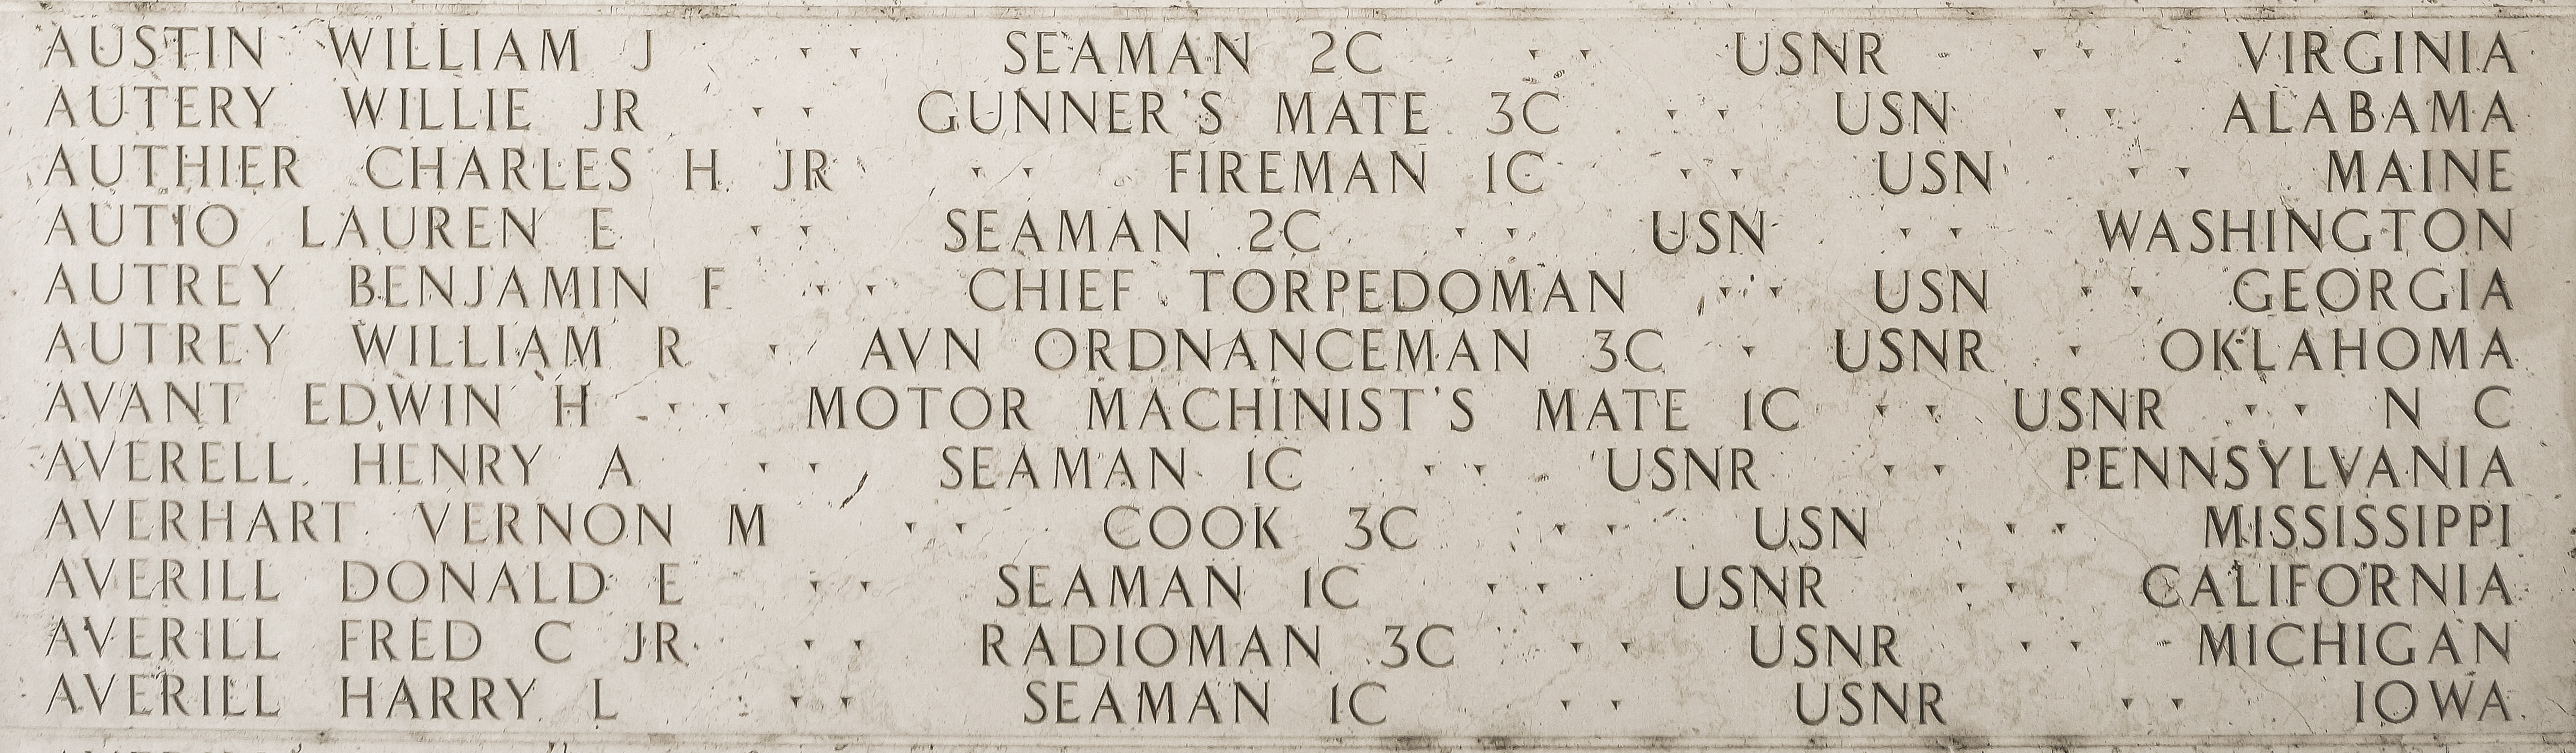 Benjamin F. Autrey, Chief Torpedoman